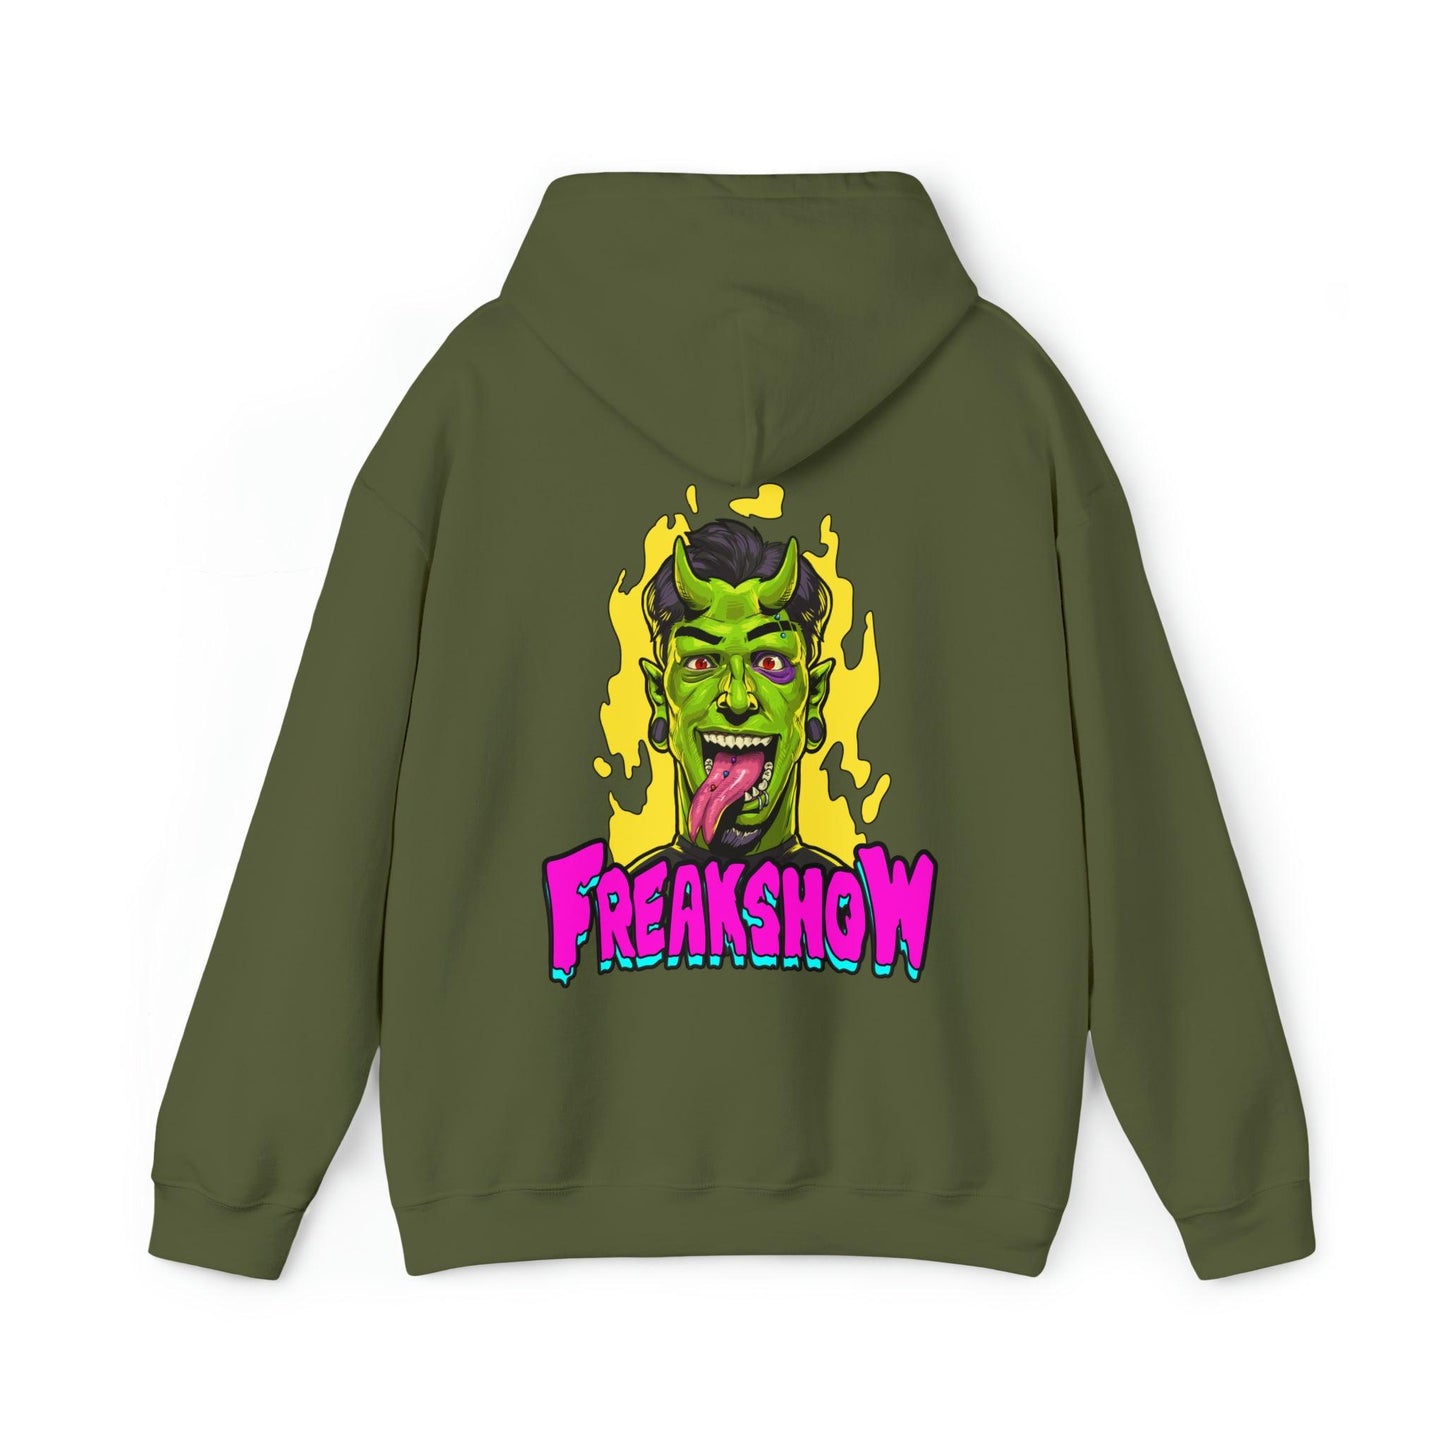 Freakshow - Unisex Heavy Blend Hooded Sweatshirt - Shaneinvasion